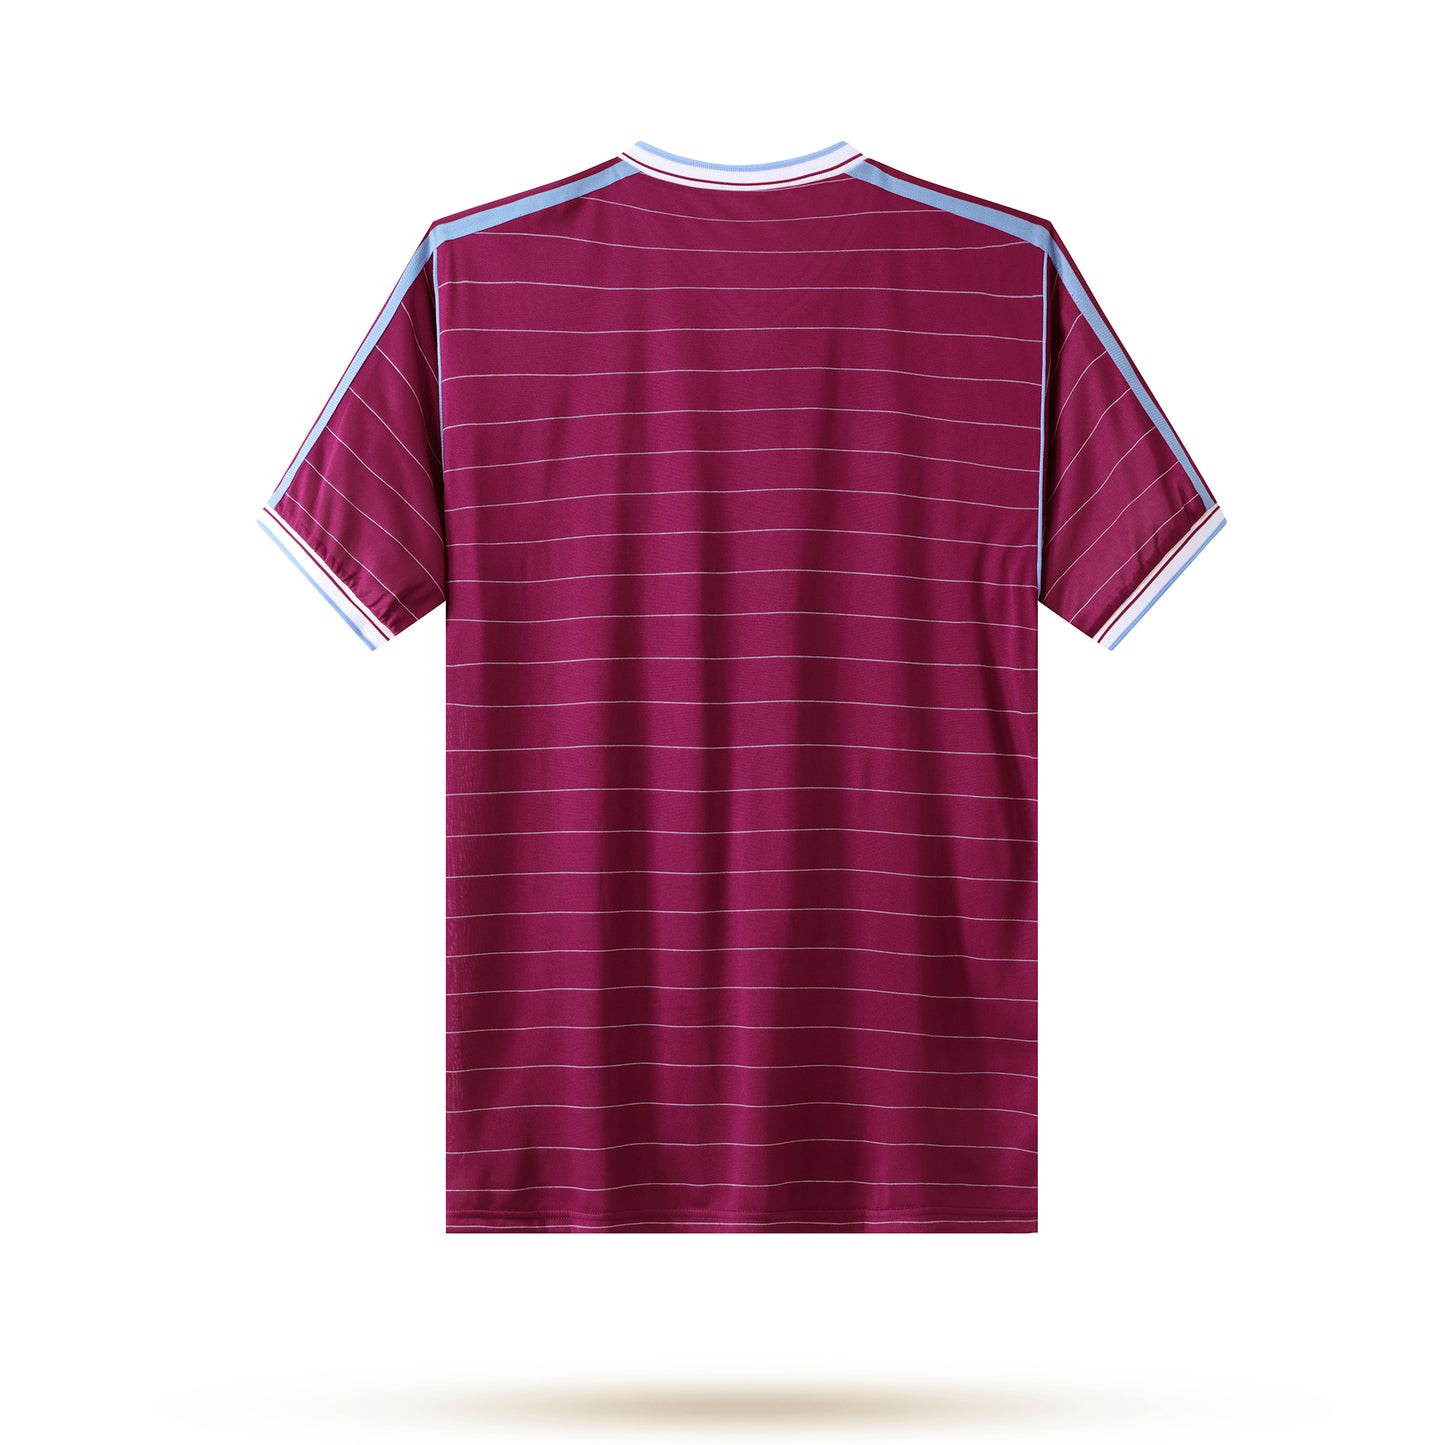 West Ham United 85-87 Home Shirt